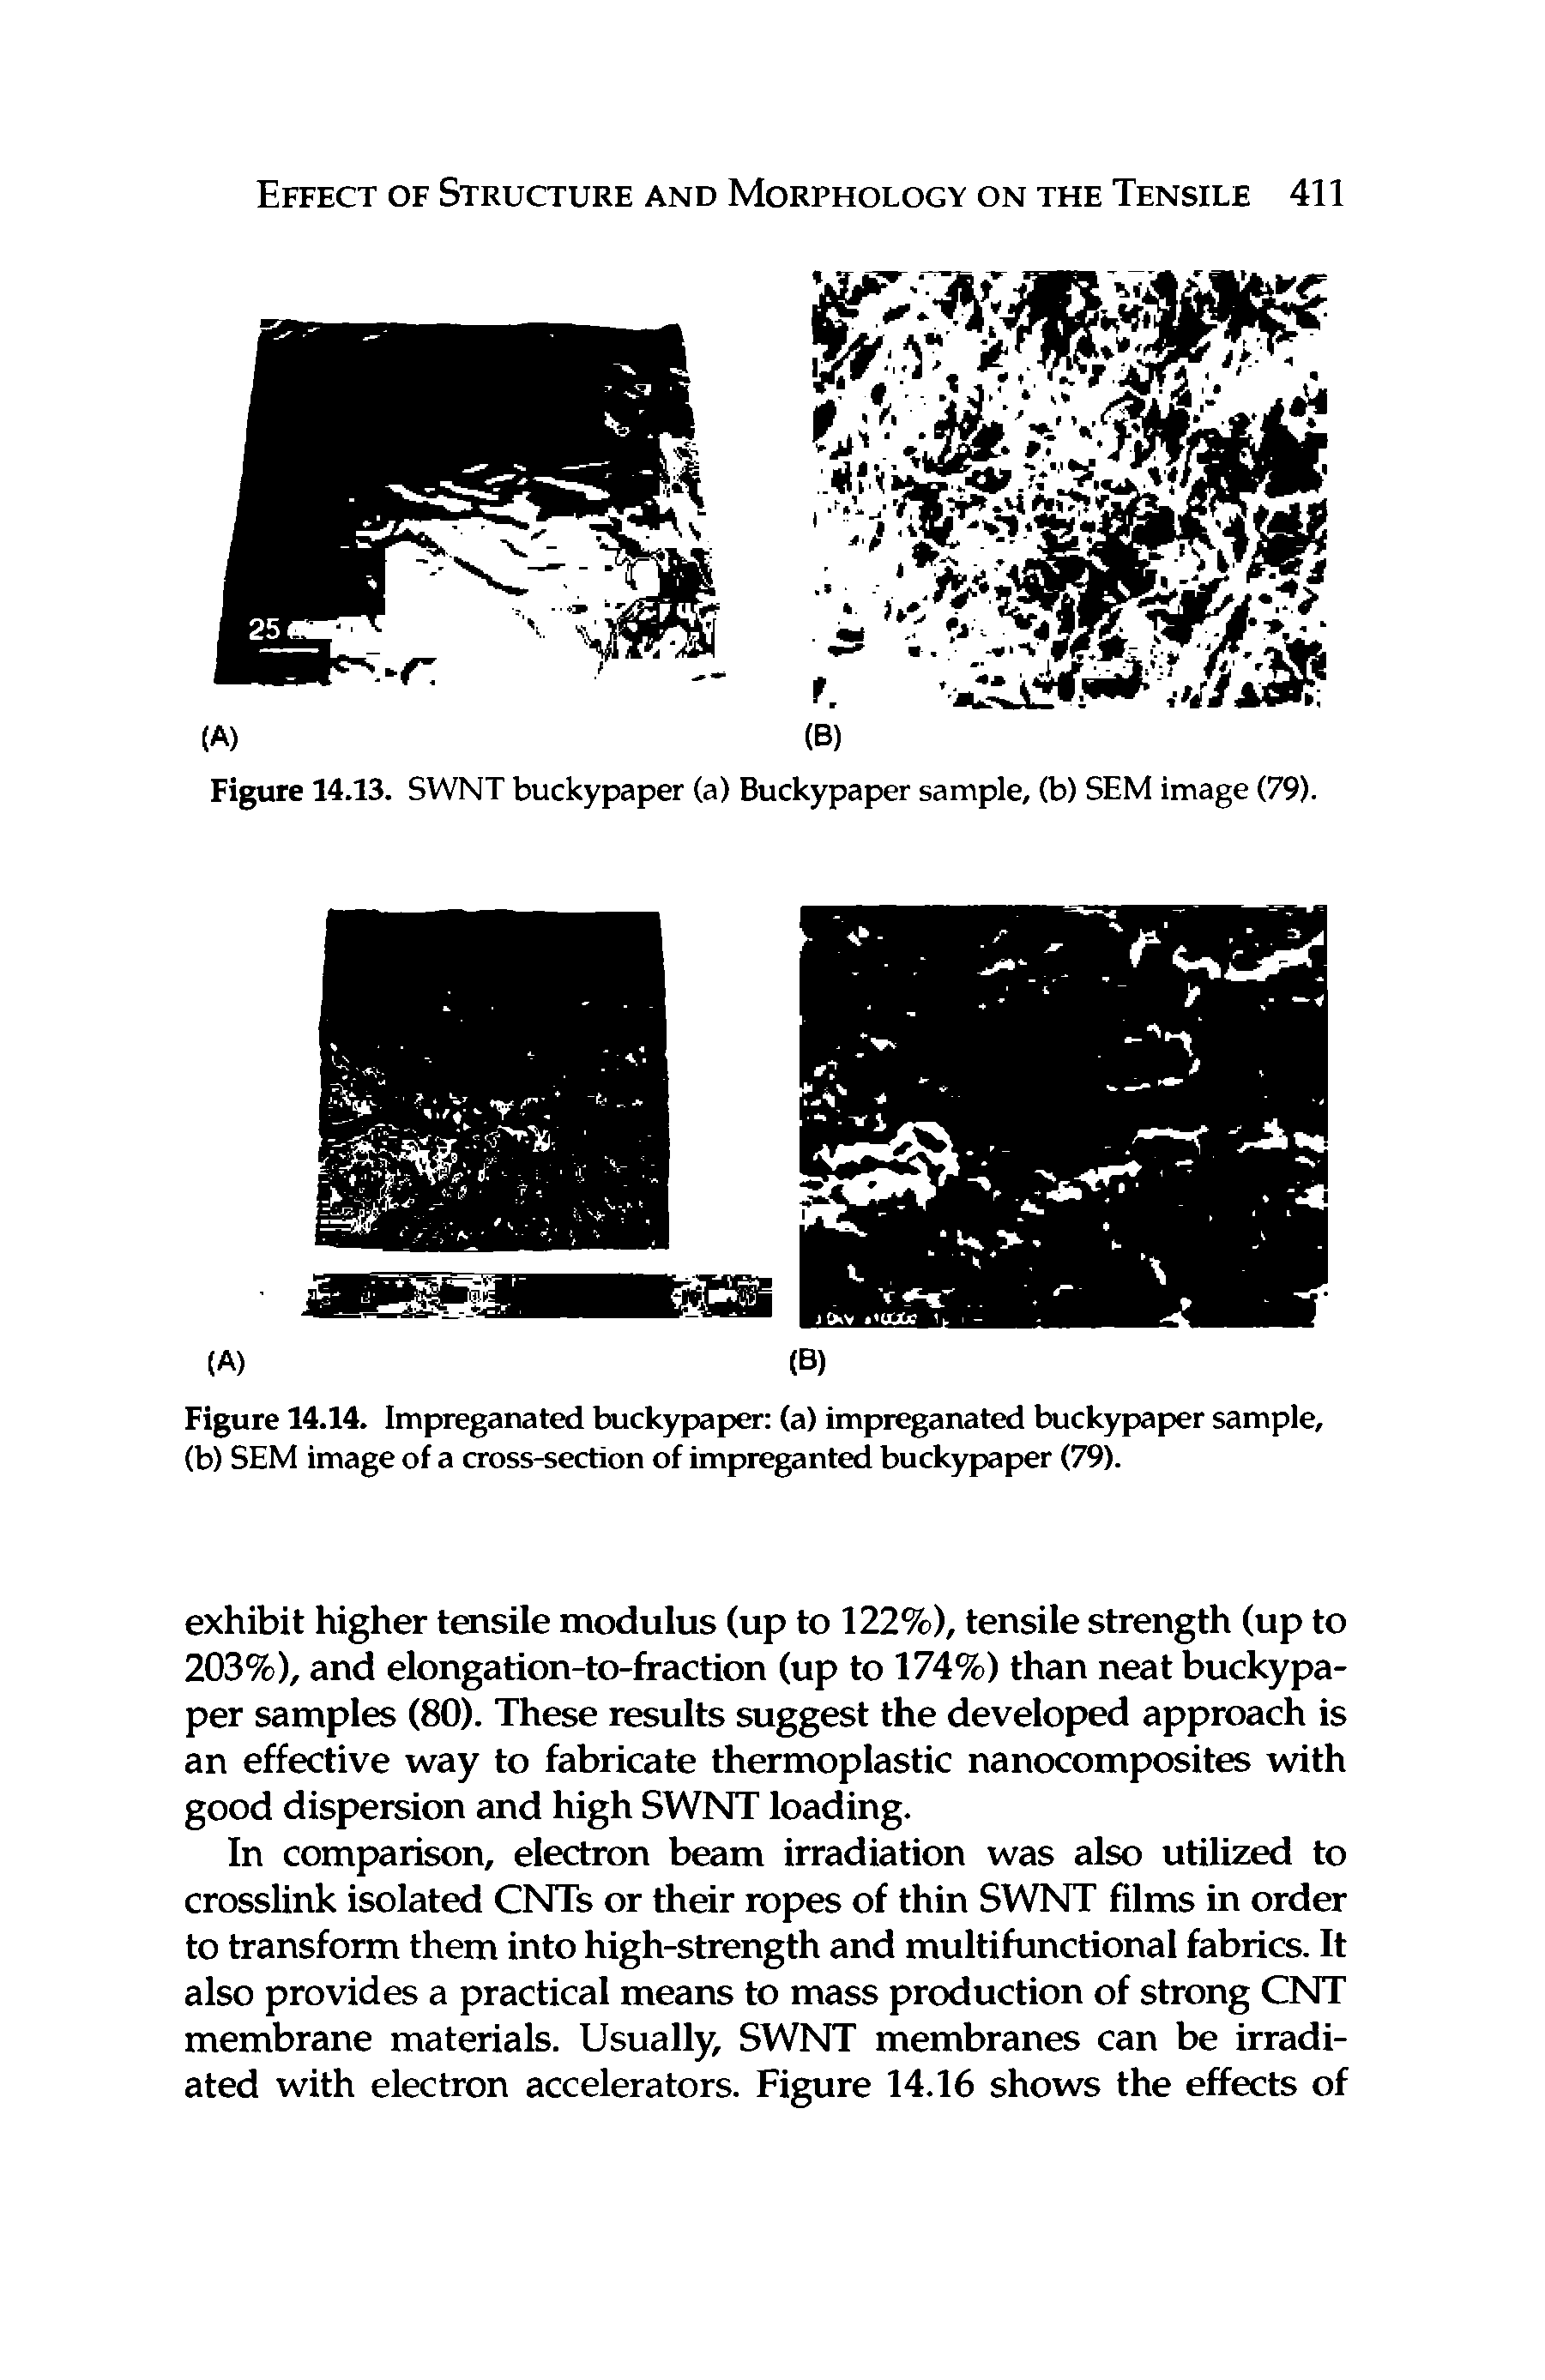 Figure 14.14. Impreganated buckypaper (a) impreganated buckypaper sample, (b) SEM image of a cross-section of impreganted buckypaper (79).